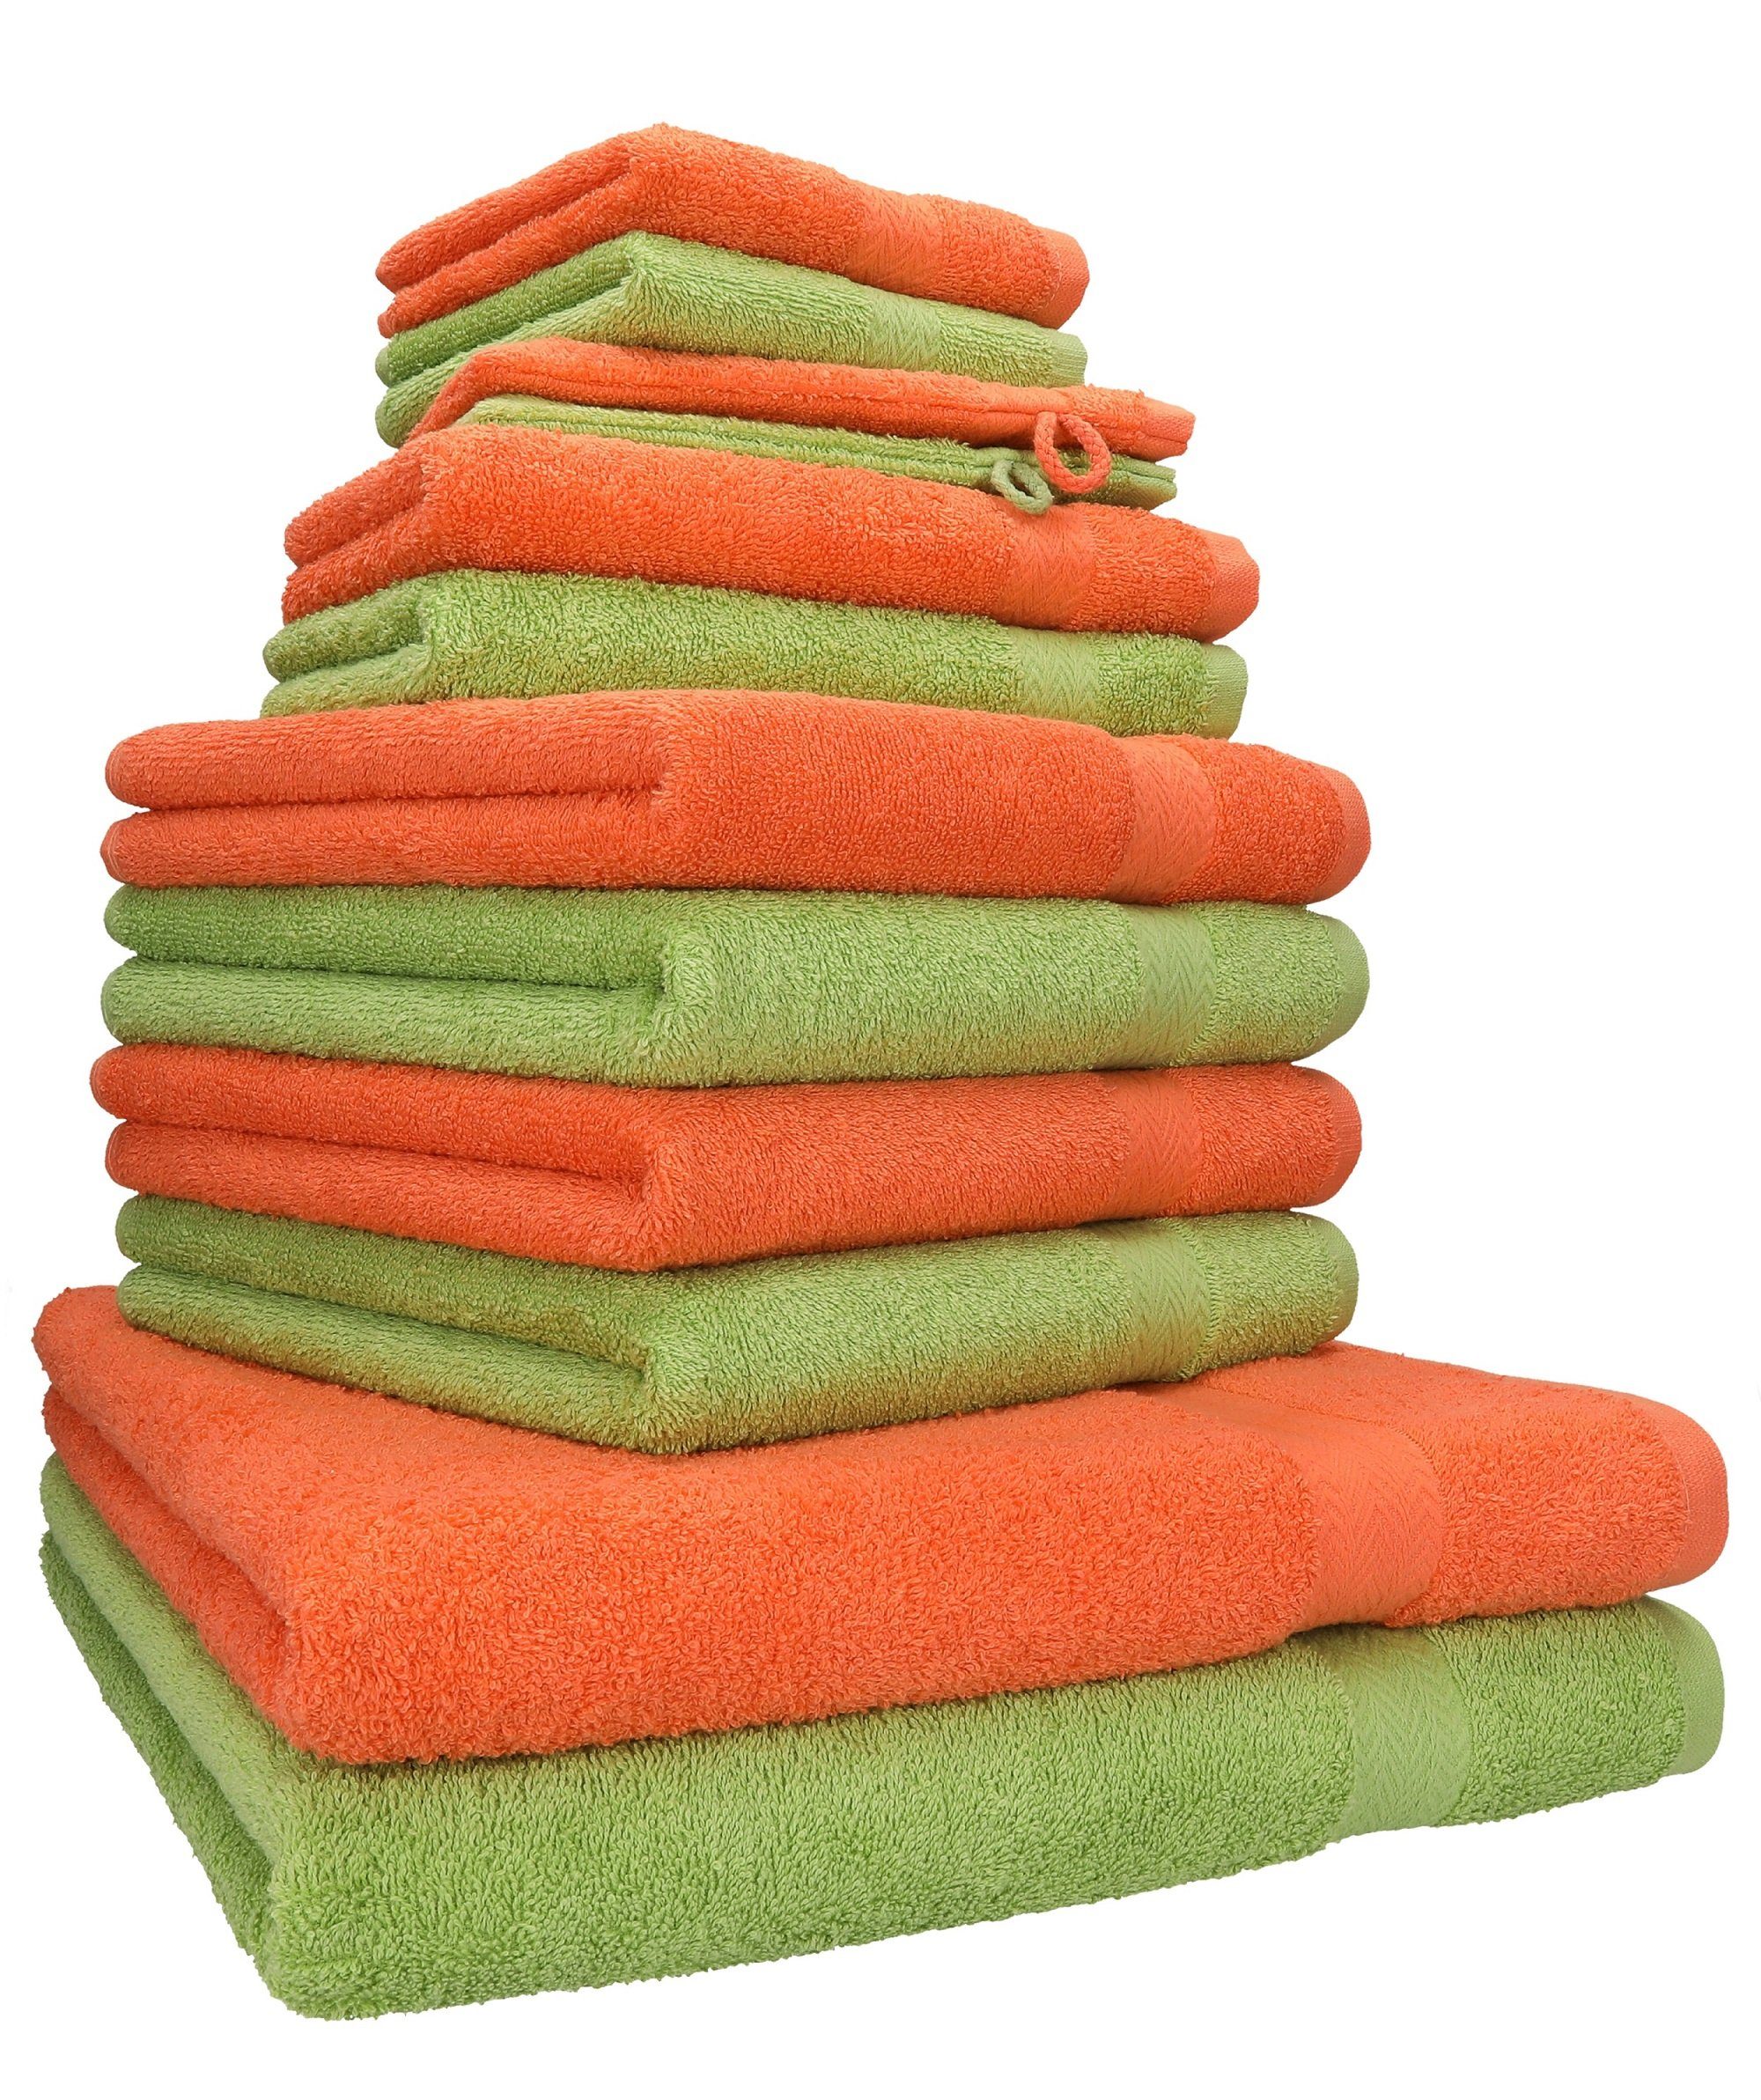 Betz Handtuch Set 2 Premium Baumwolle Duschtücher 2 blutorange/avocadogrün, Seiftücher Handtücher Set Handtuch 100% Gästetücher Farbe Waschhandschuhe (12-tlg) 2 12-TLG. 2 4 100% Baumwolle